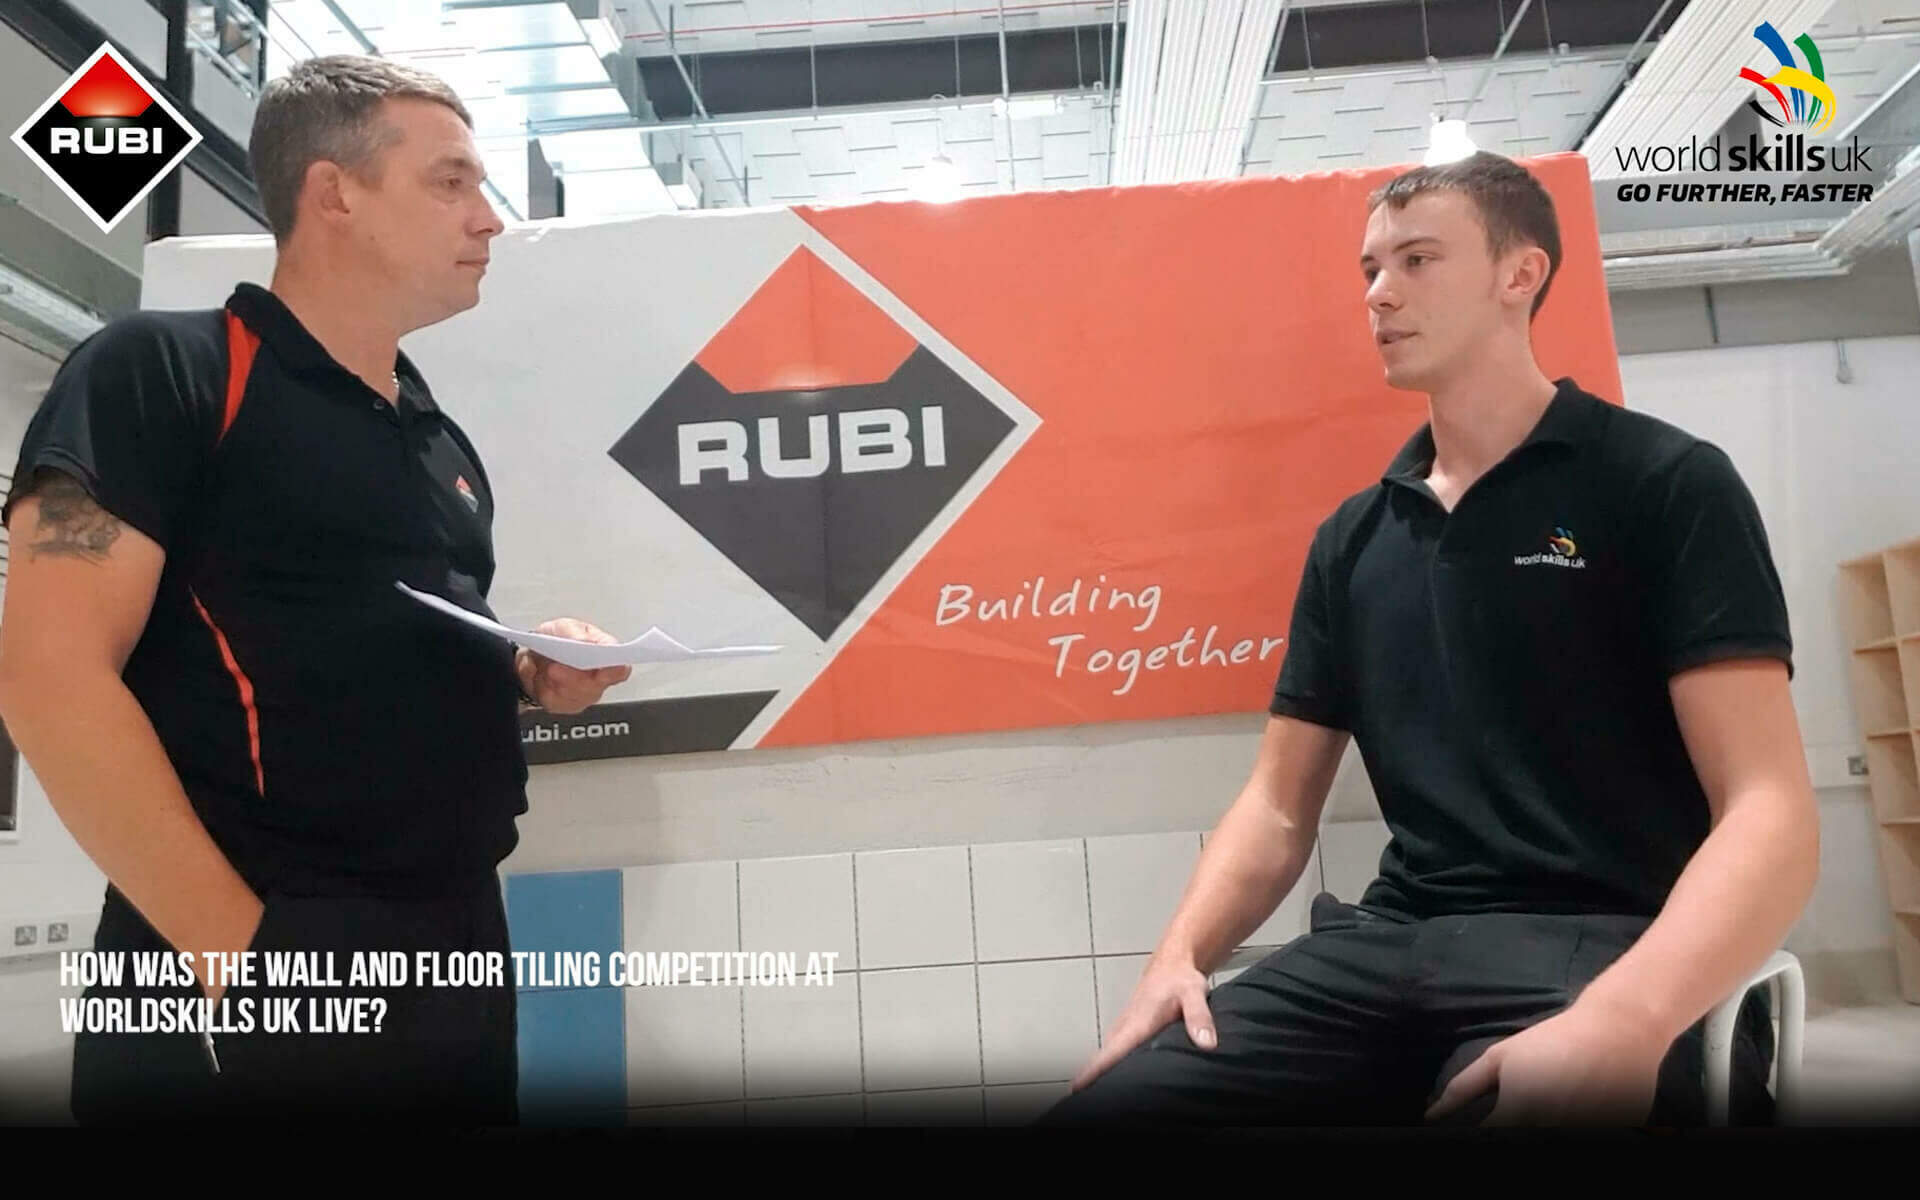 Interview to Mark Scott, part of Squad UK WorldSkills, sponsored by RUBI